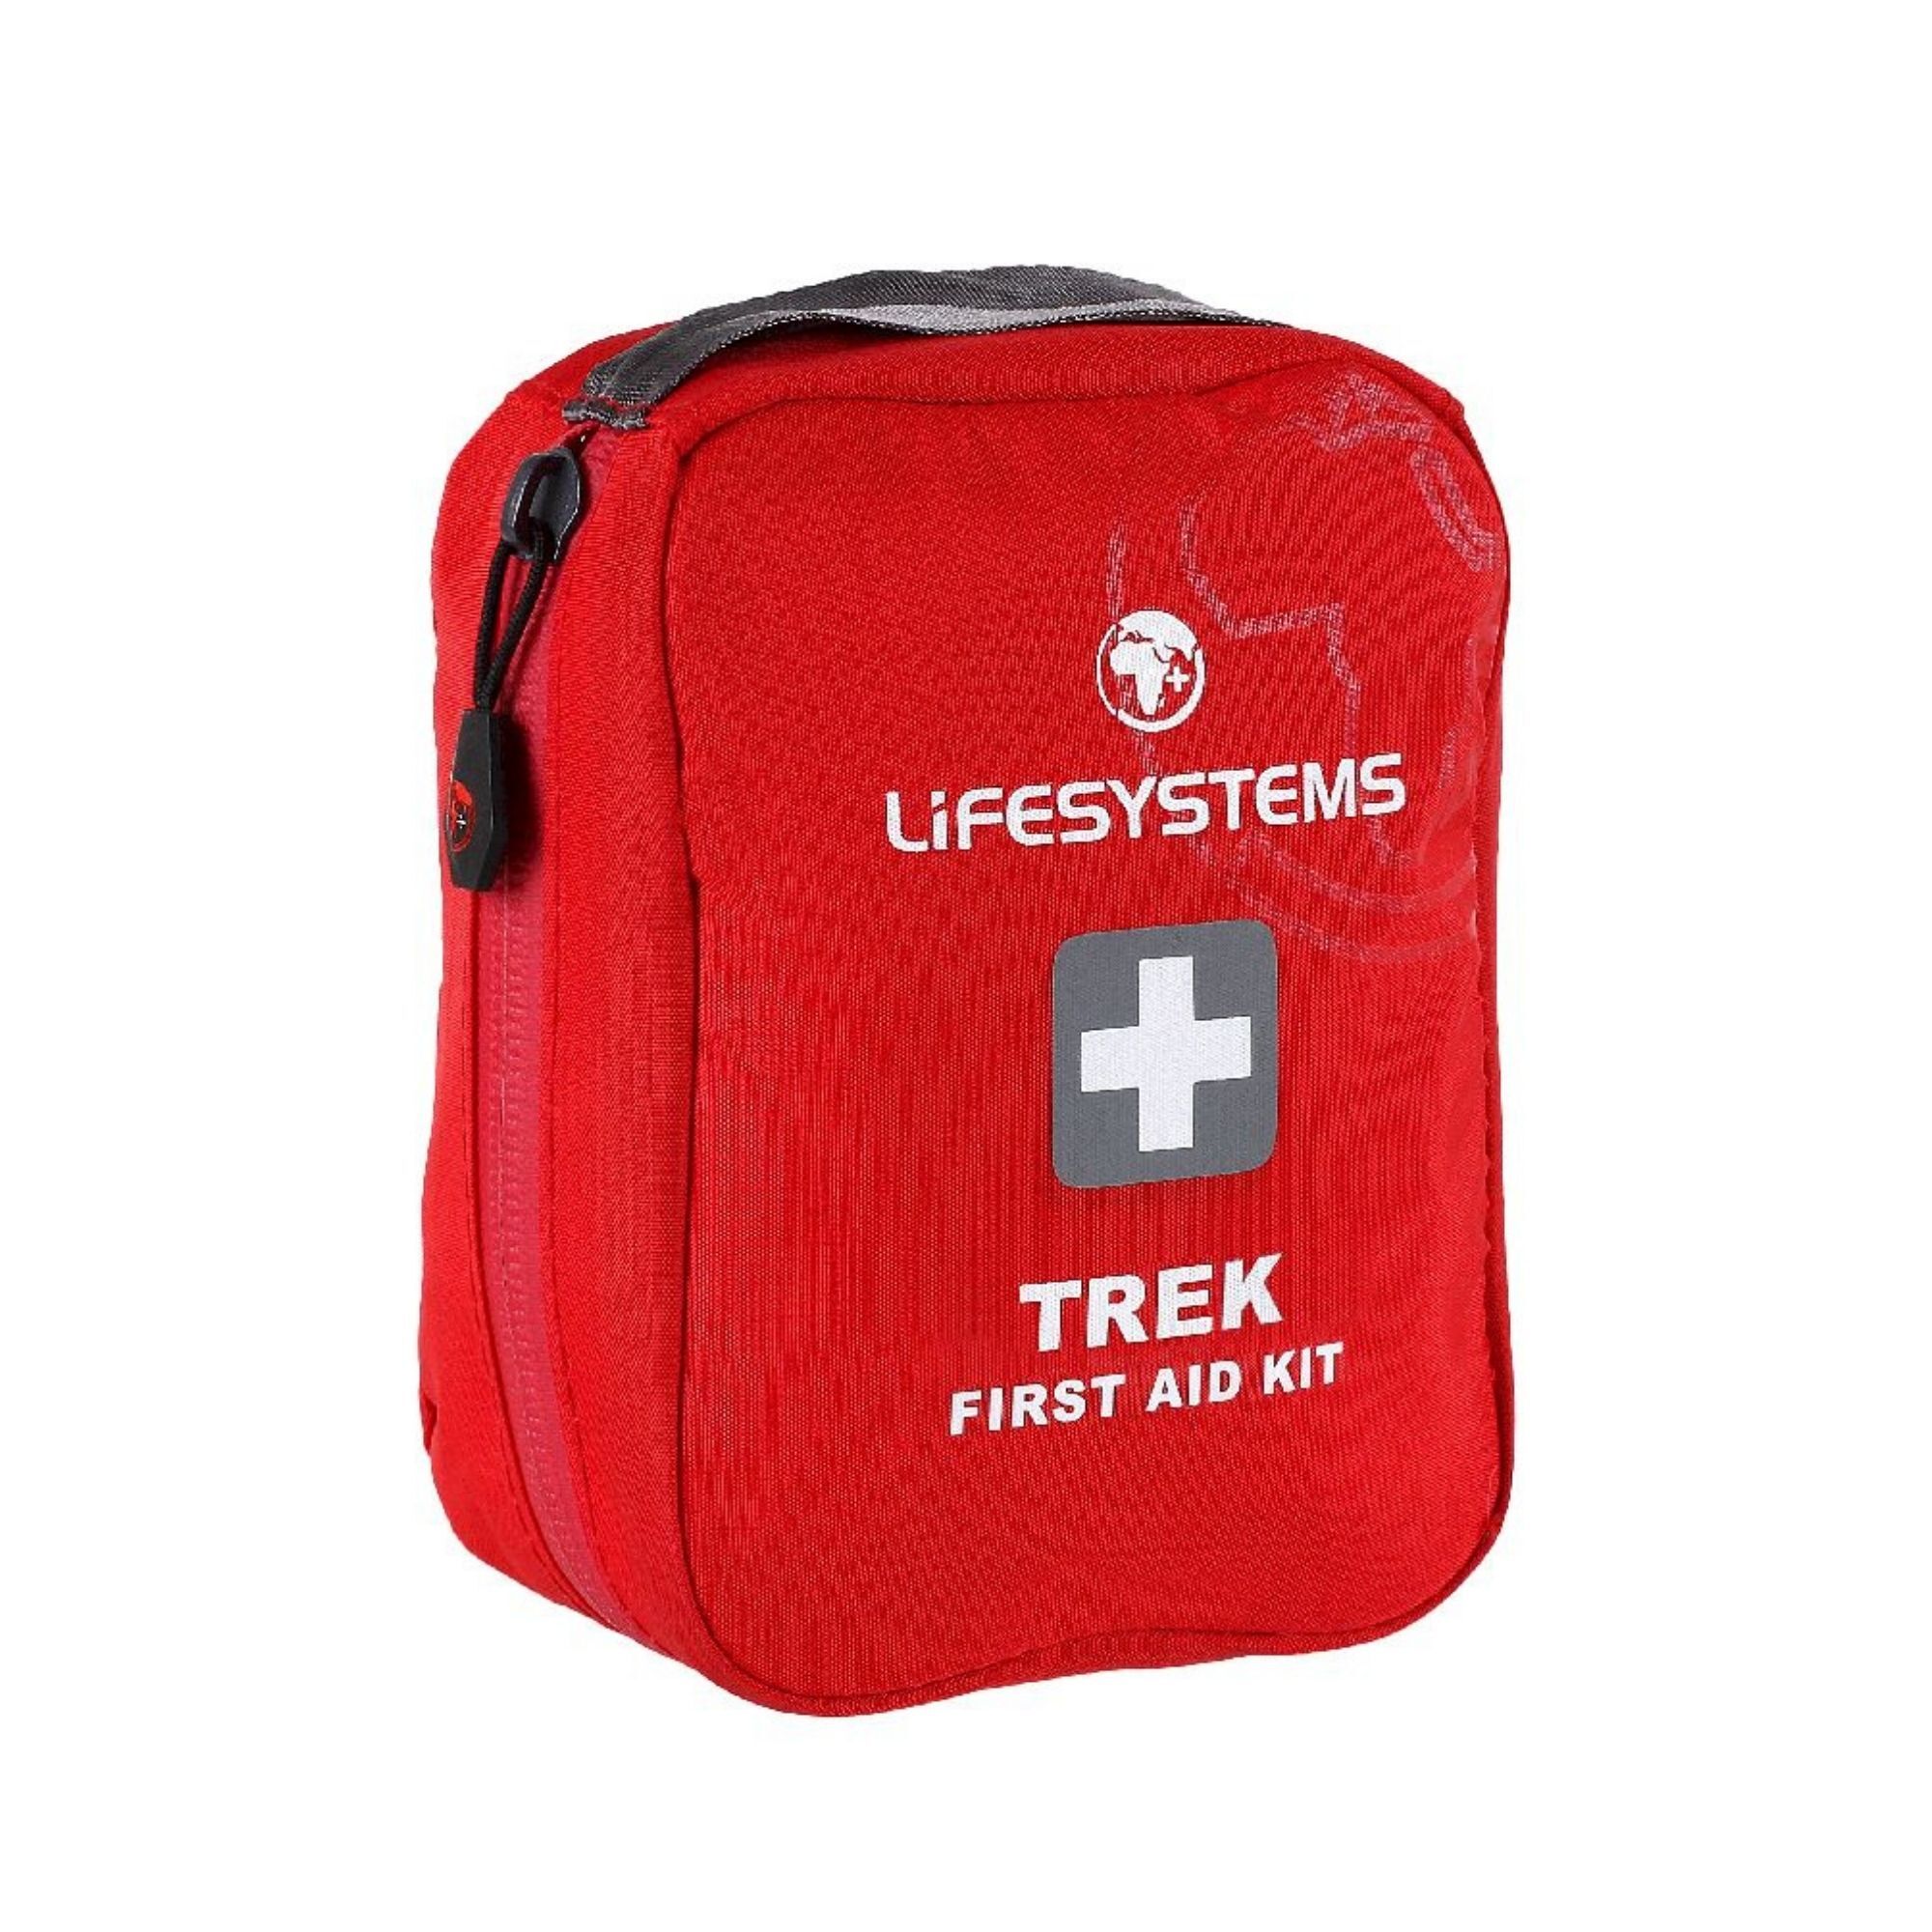 LittleLife Trek First Aid Kits - First aid kit